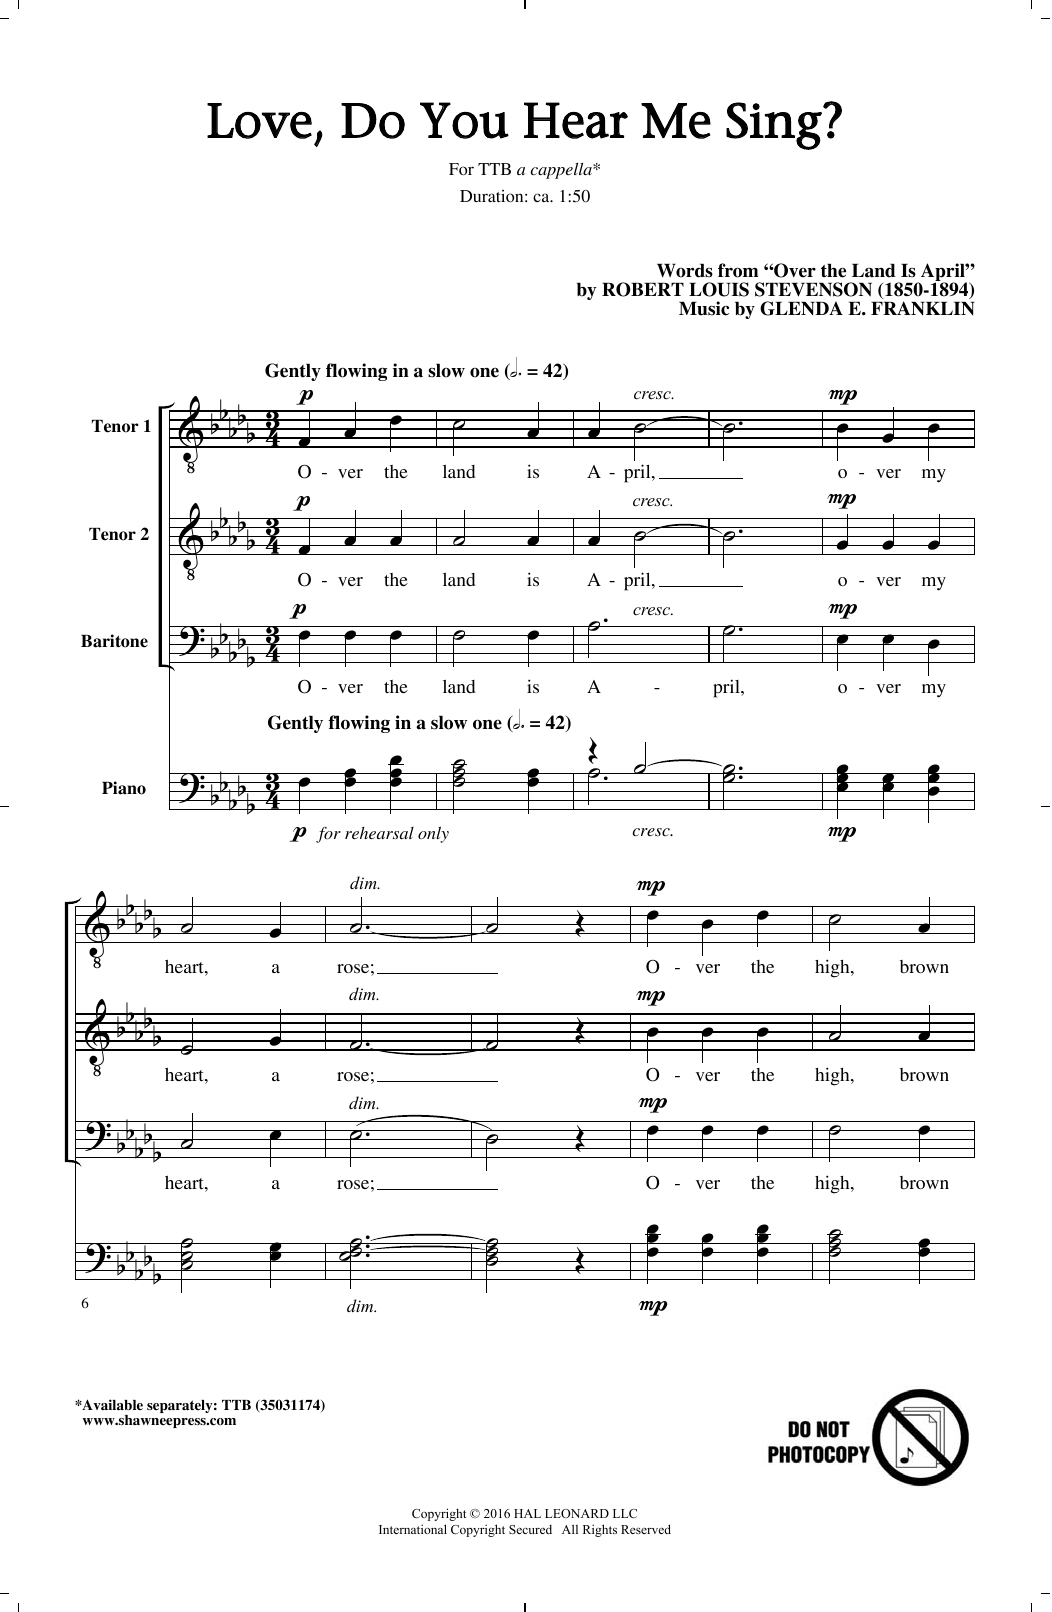 Glenda E. Franklin Love, Do You Hear Me Sing? sheet music notes and chords arranged for TTB Choir